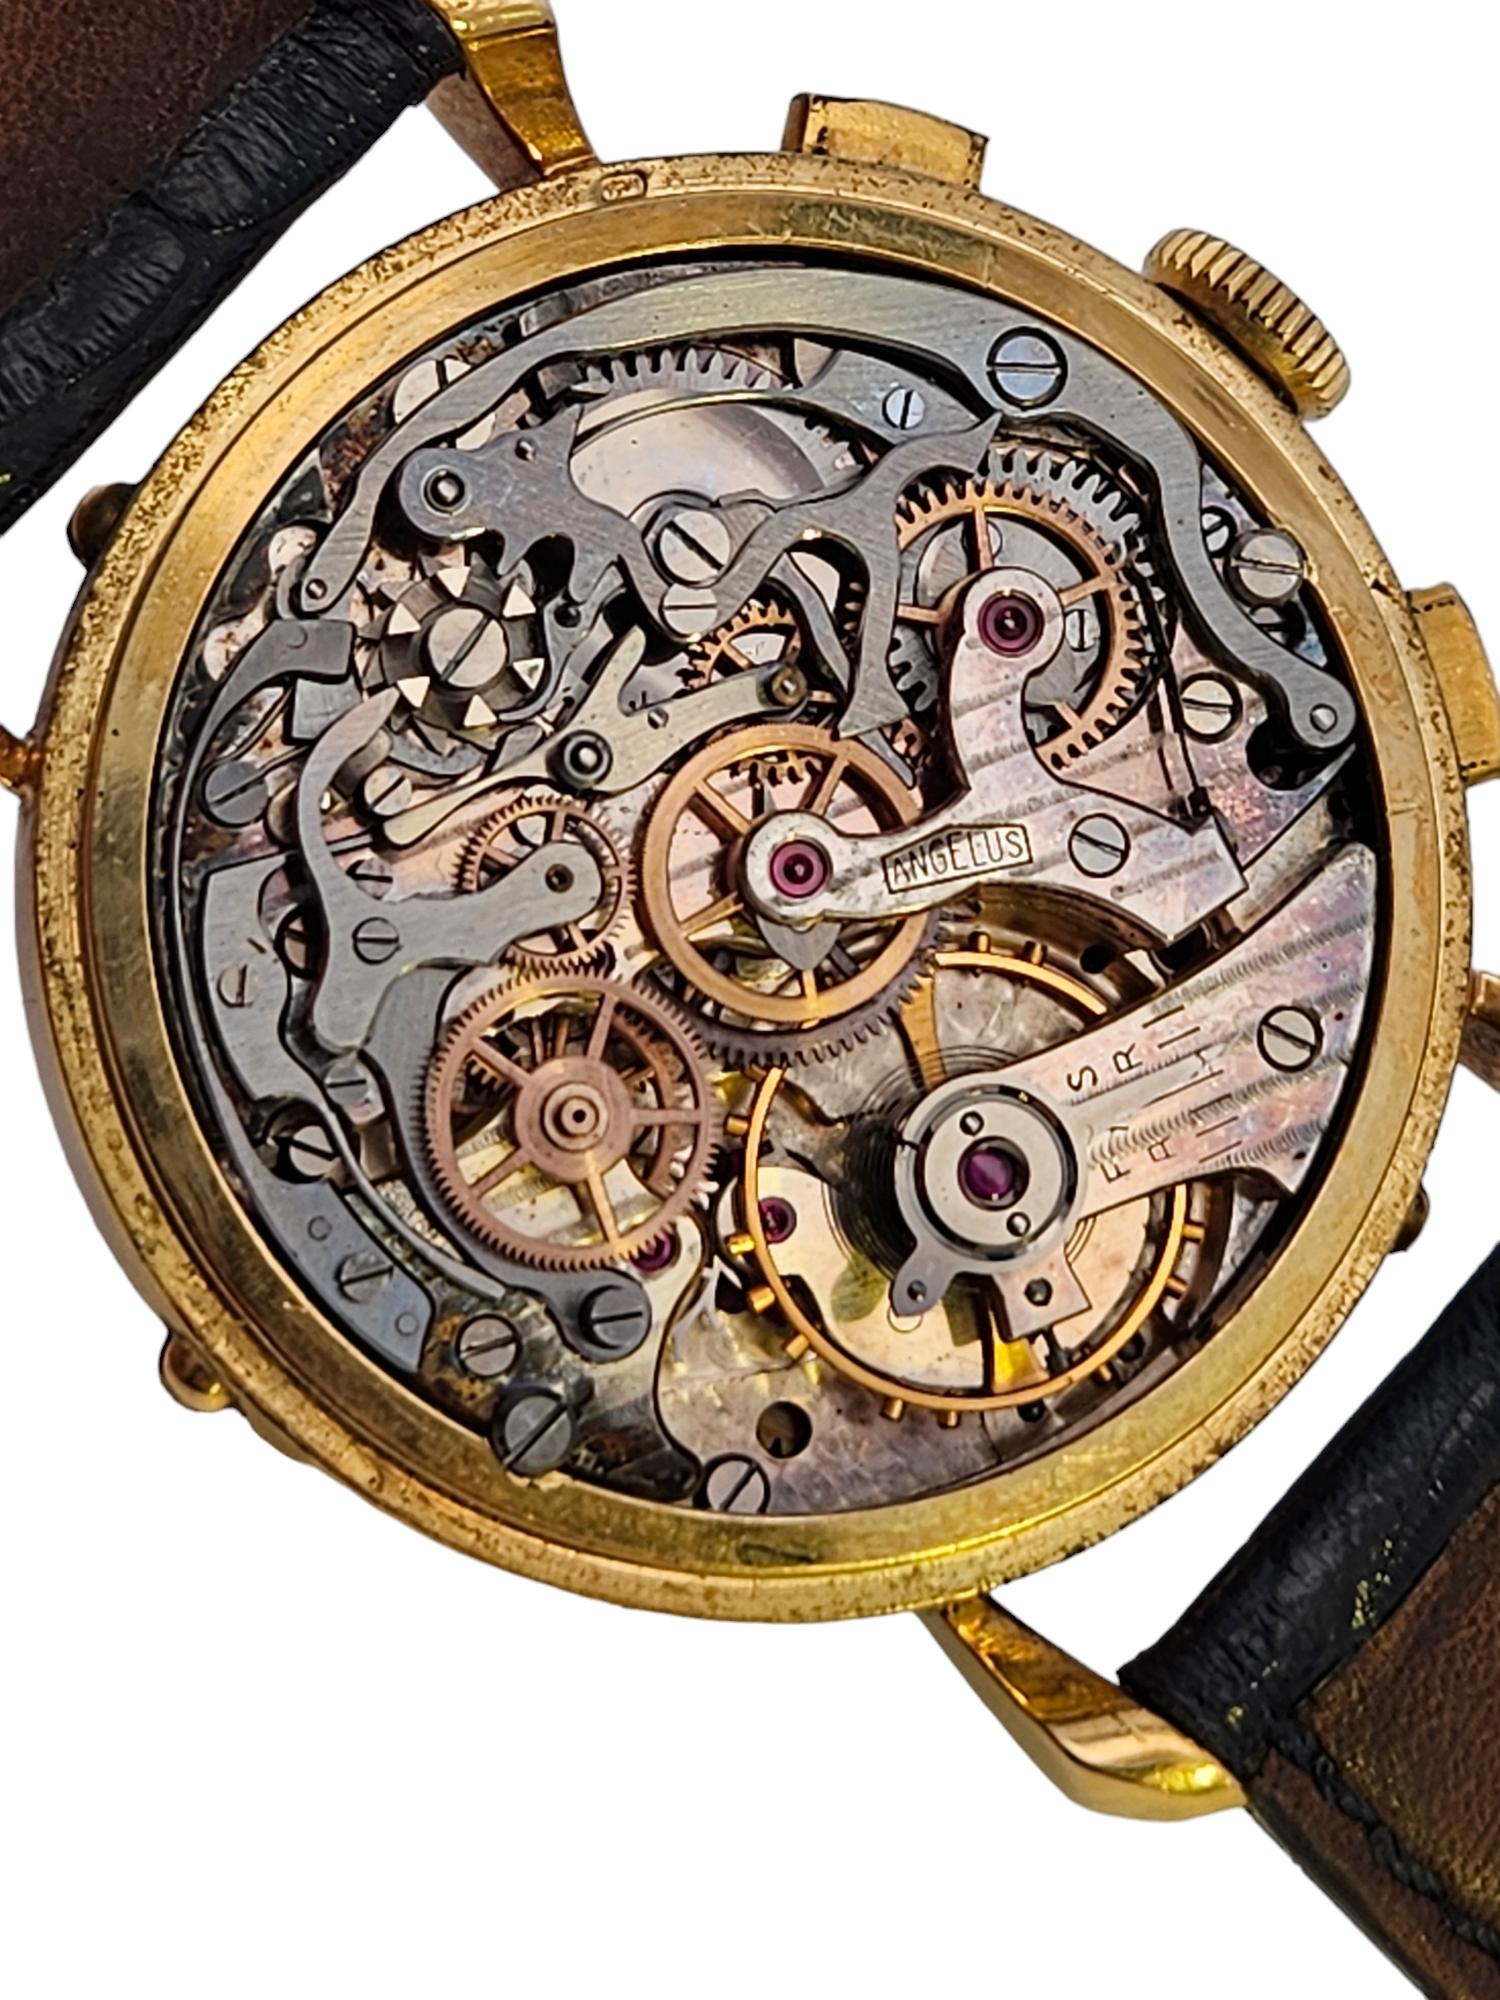 18 Kt Gold Angelus Chronodate Triple Date Jumbo 38mm Chronograph Wrist Watch For Sale 11